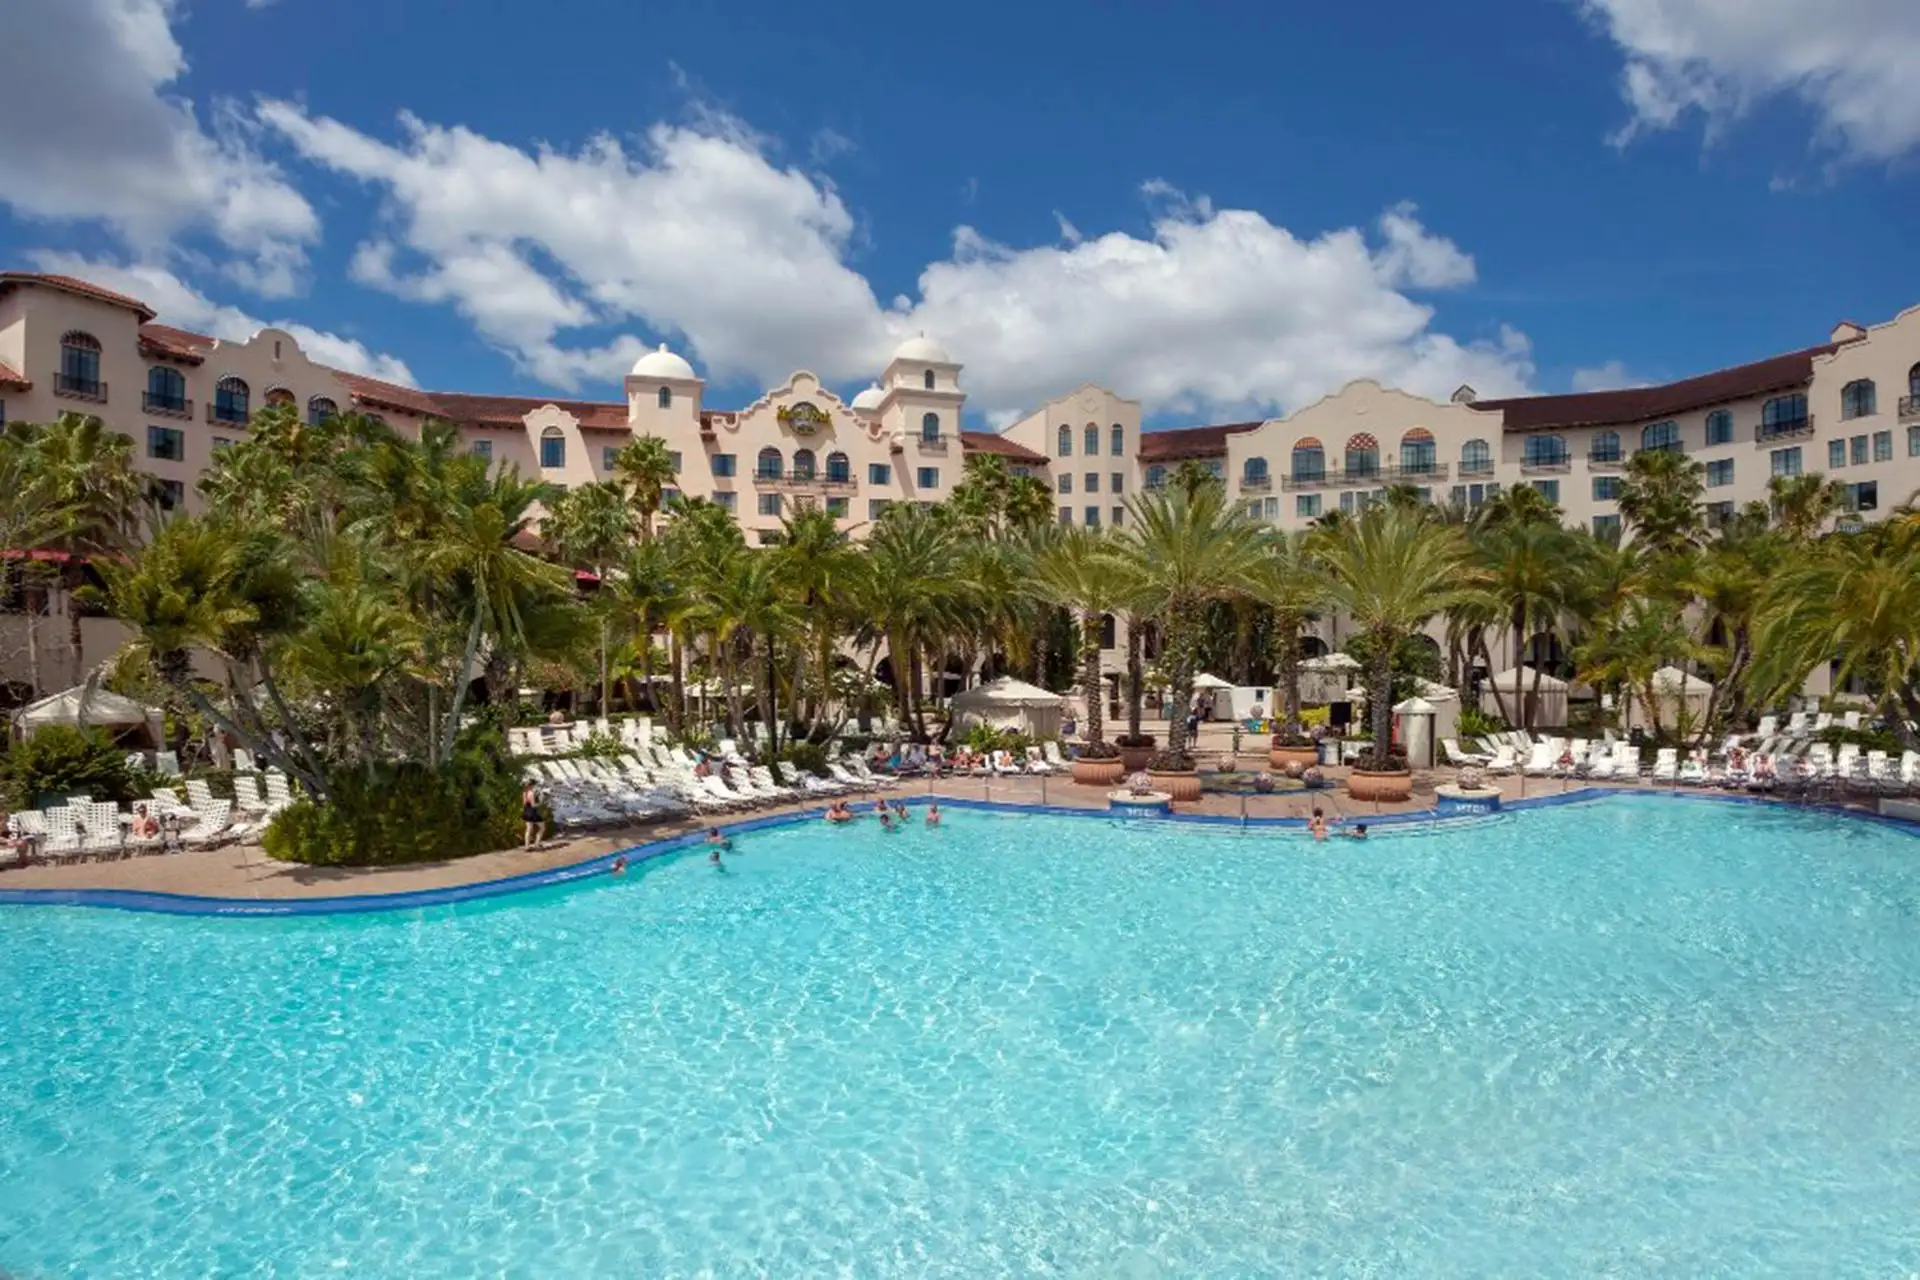 Hard Rock Hotel at Universal Orlando Resort in Florida